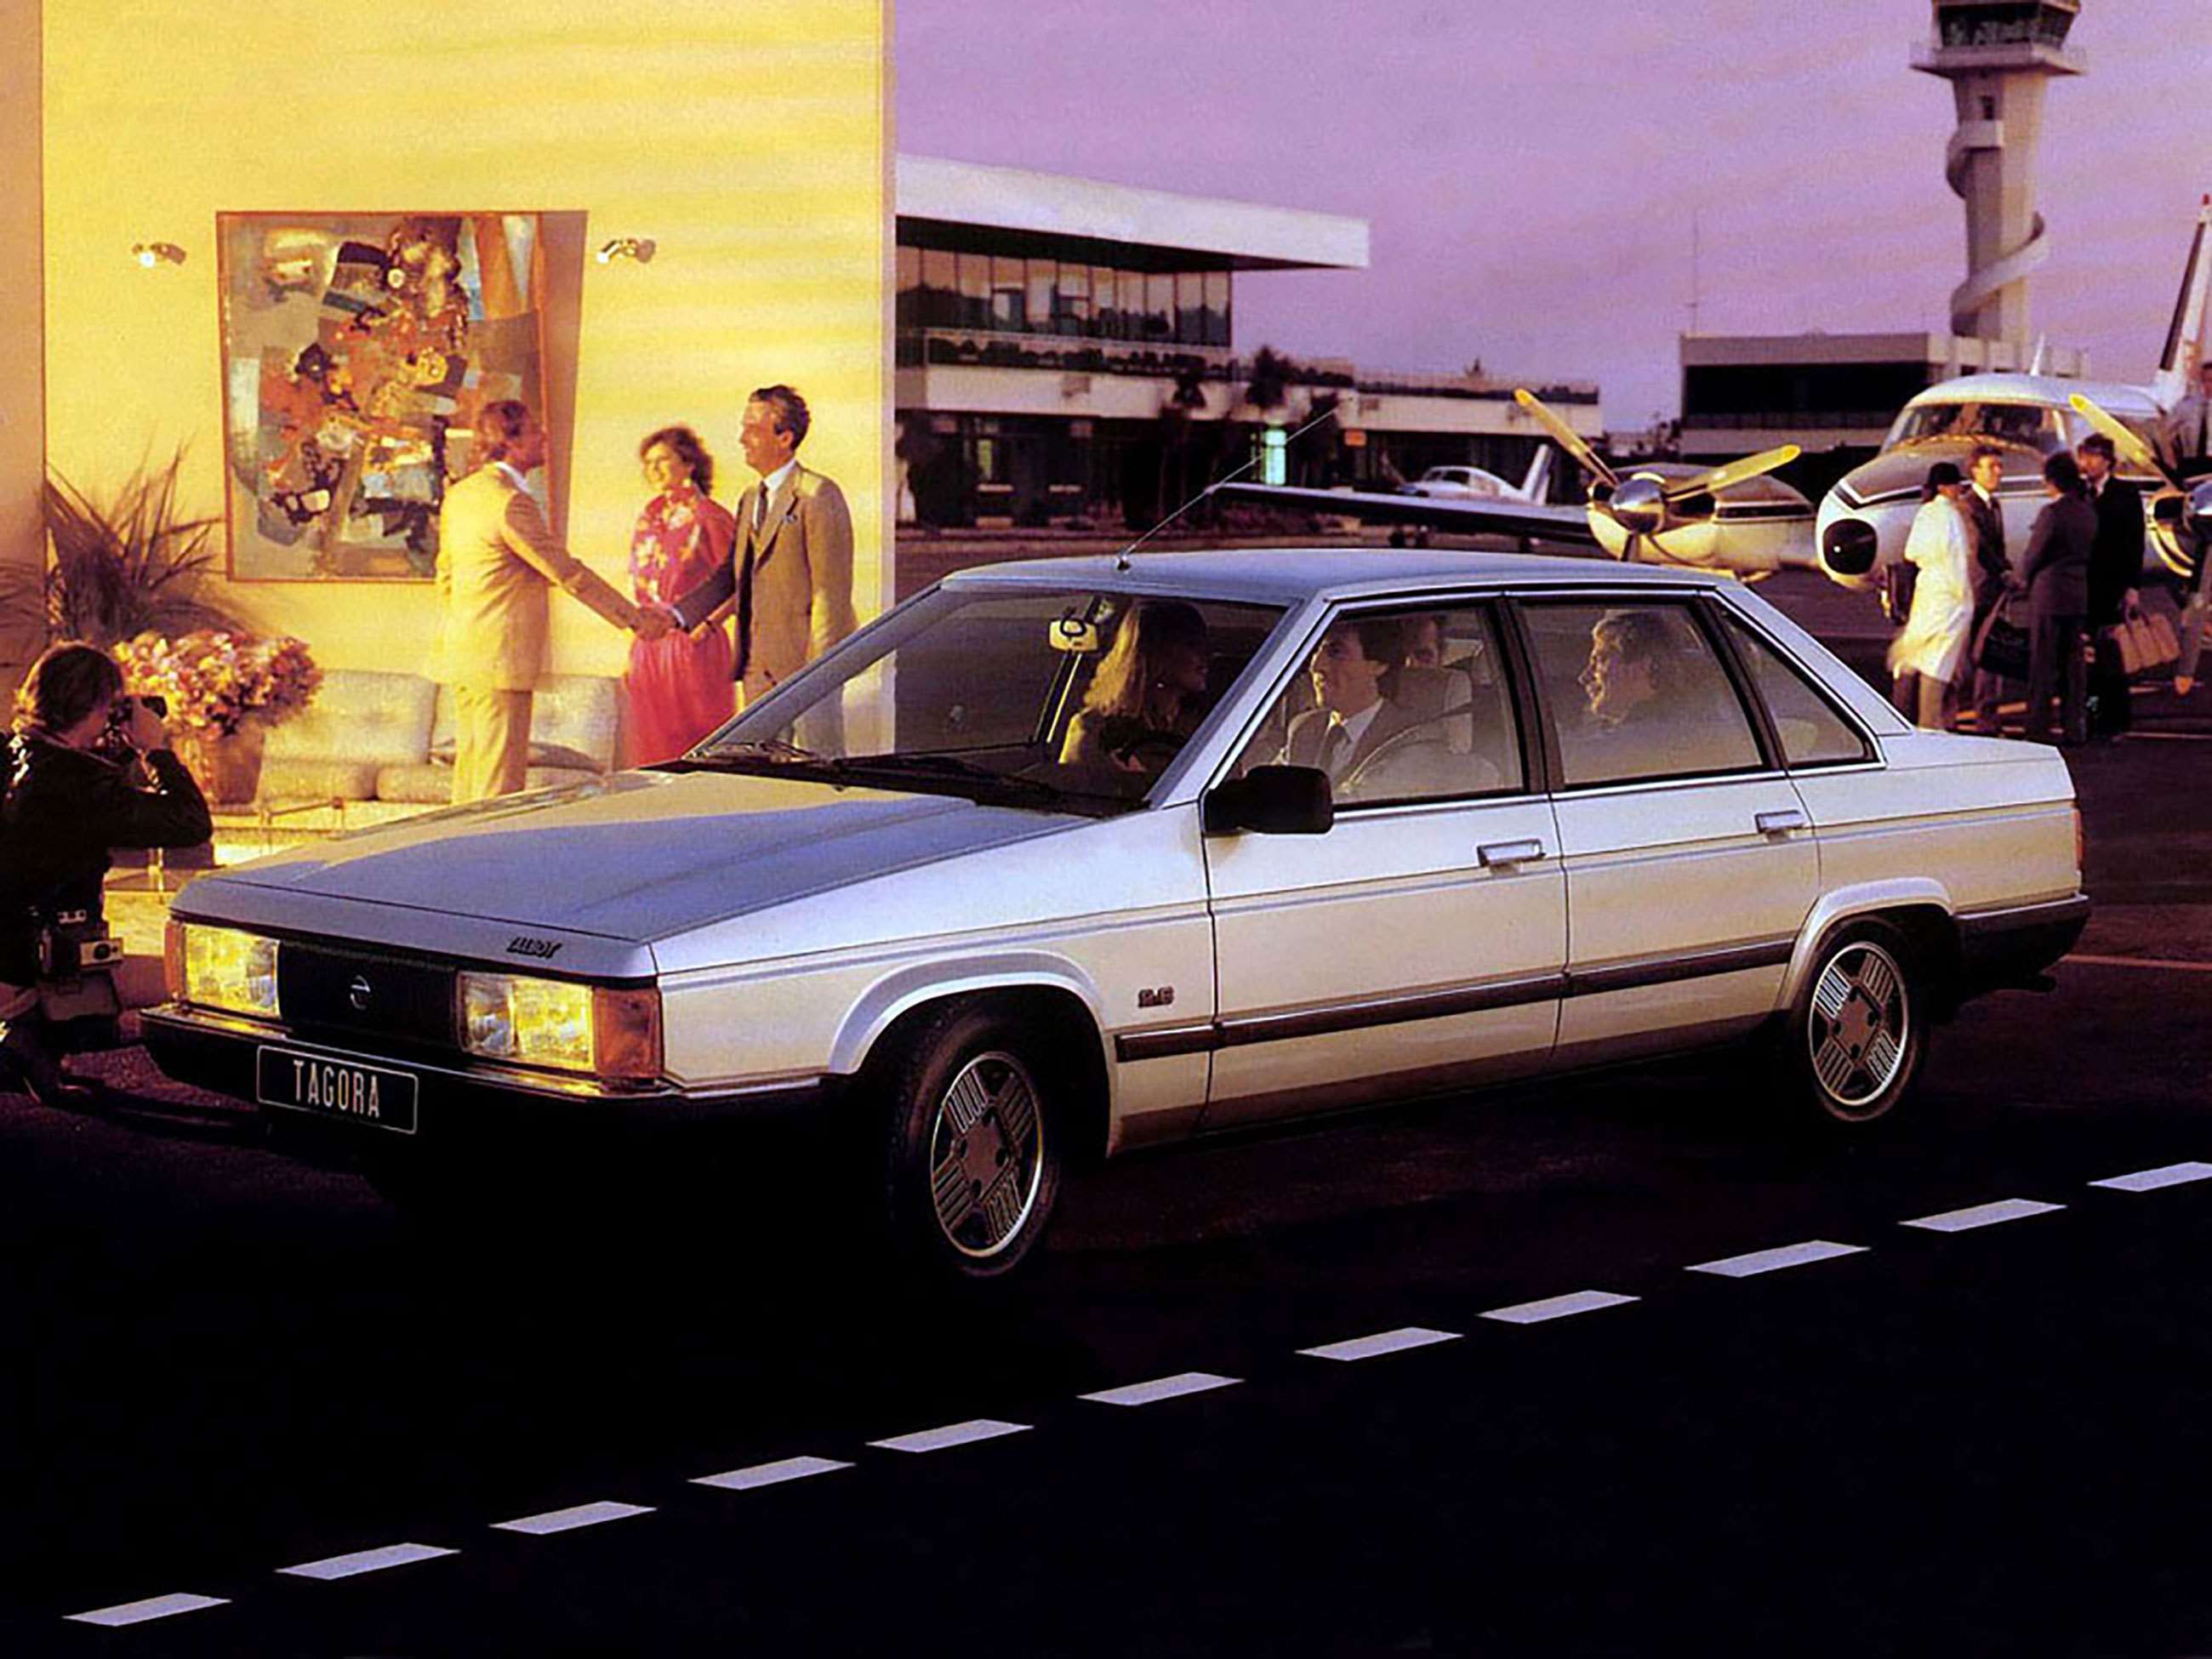 six-automotive-flops-1980-4-talbot-tagora-goodwood-07122020.jpg